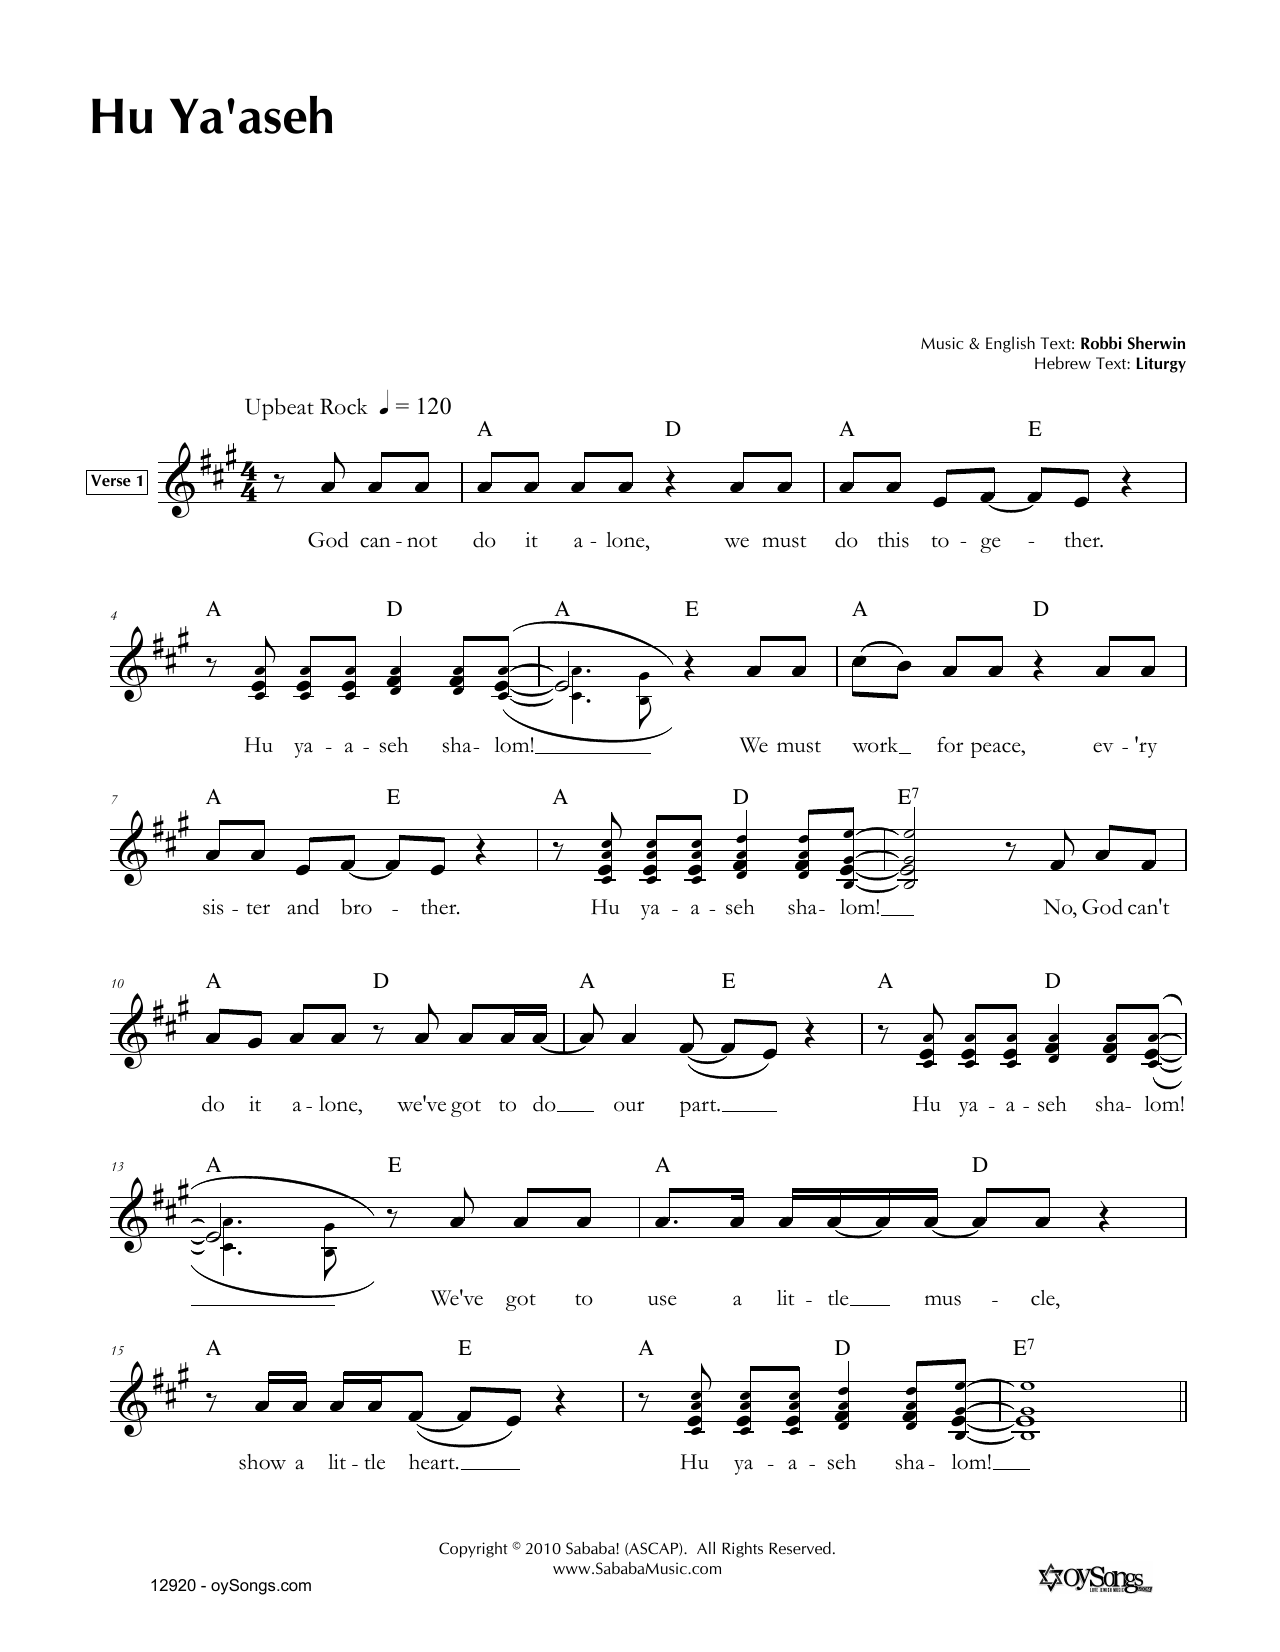 Robbi Sherwin Hu Ya'aseh sheet music notes and chords arranged for Lead Sheet / Fake Book